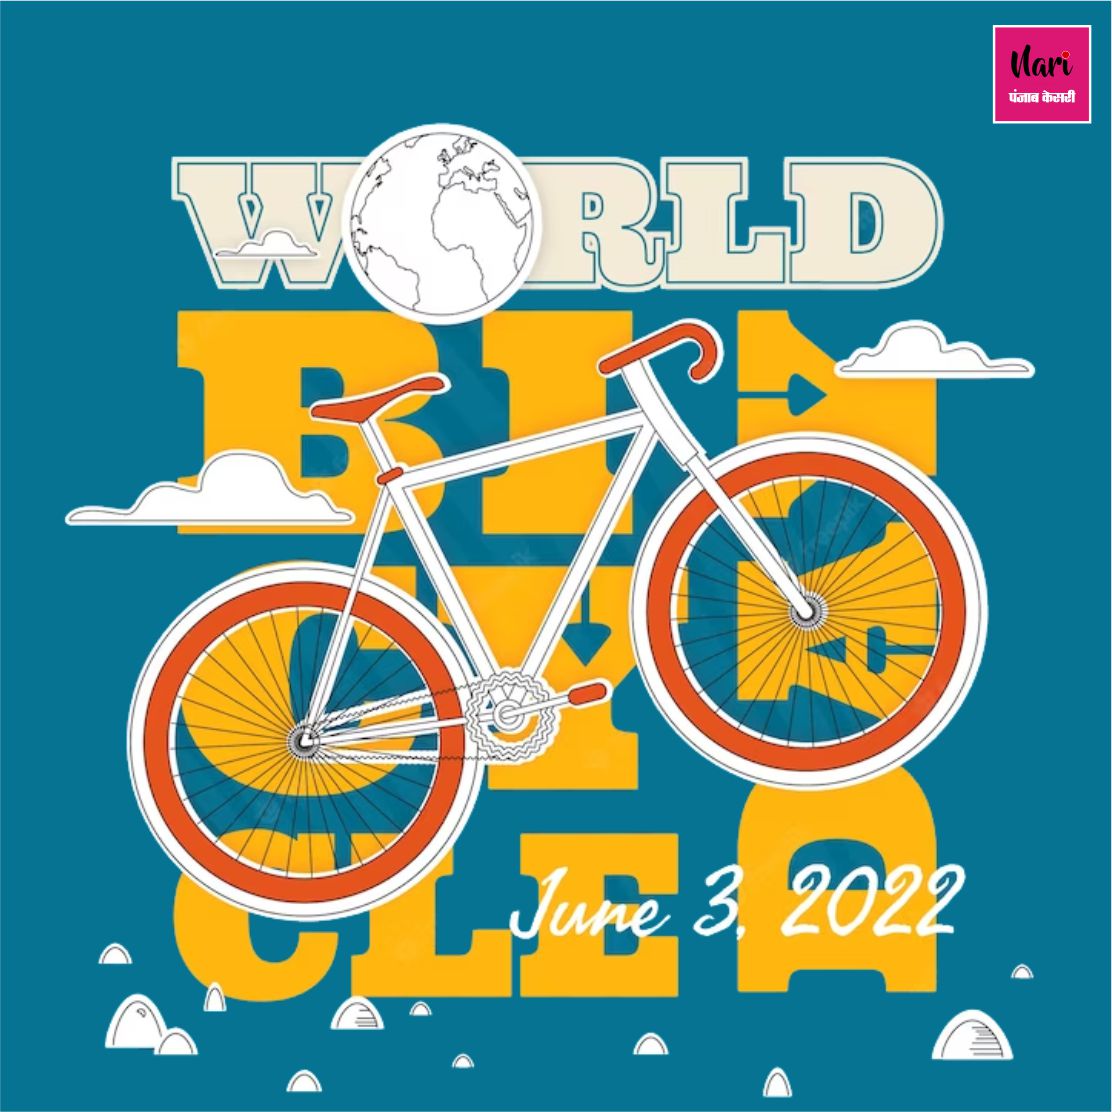 World Bicycle Day
#WorldBicycleDay #bicycle #cycling #bicycling #BicycleDay #cycling #cyclingbenefits #healthbenefits #bestexercise #Stressfree #Lifestyle #healthylifestyle